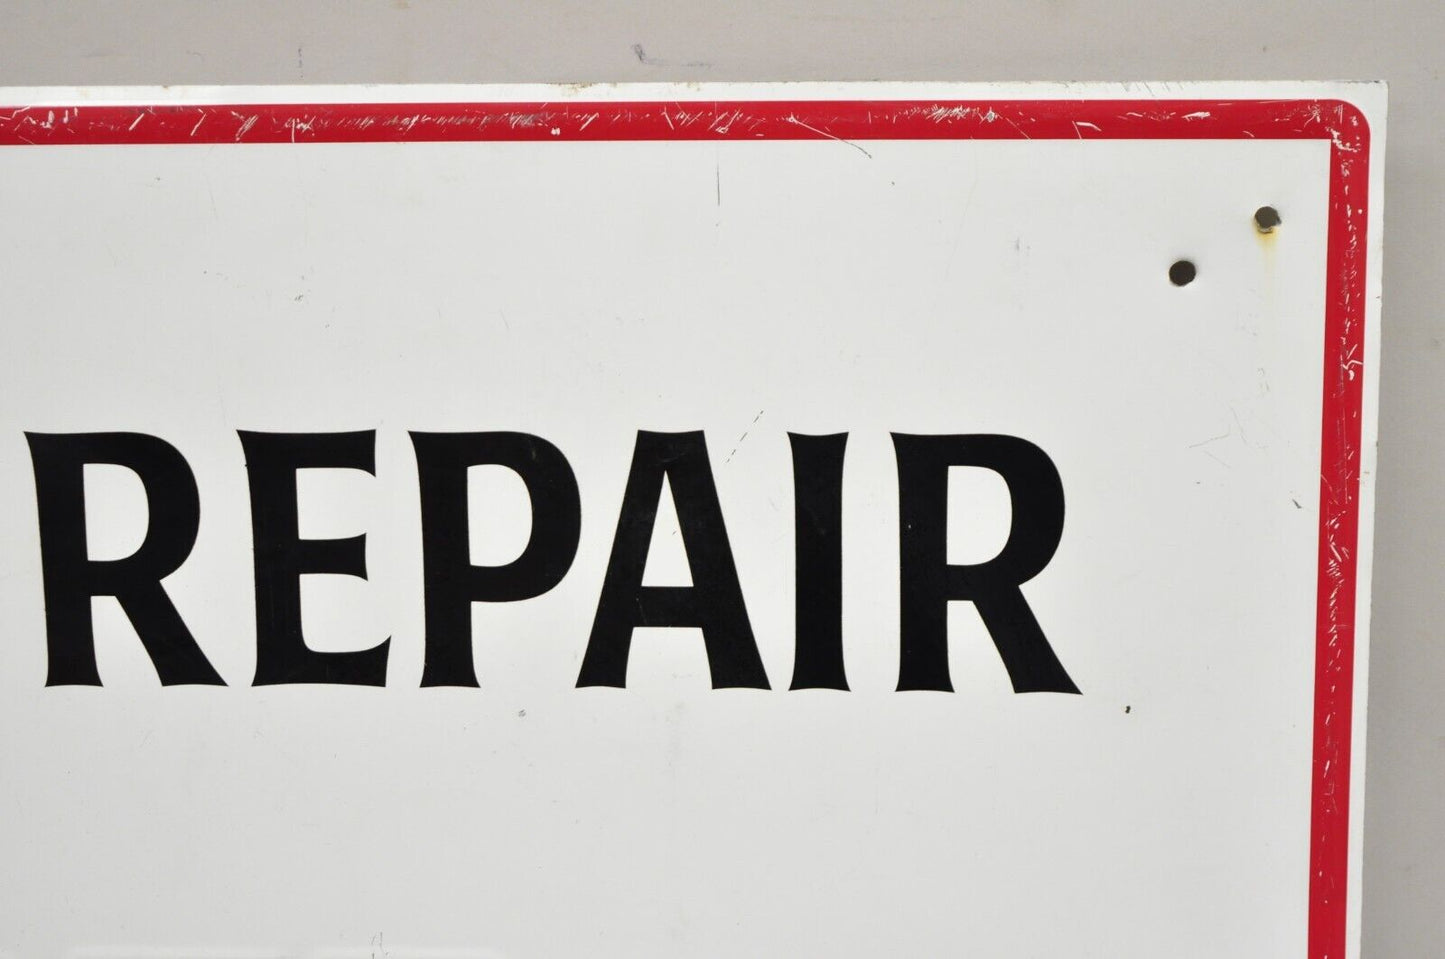 Vintage Jasper Engines & Transmissions Ken's Auto Repair Sheet Metal Retail Sign